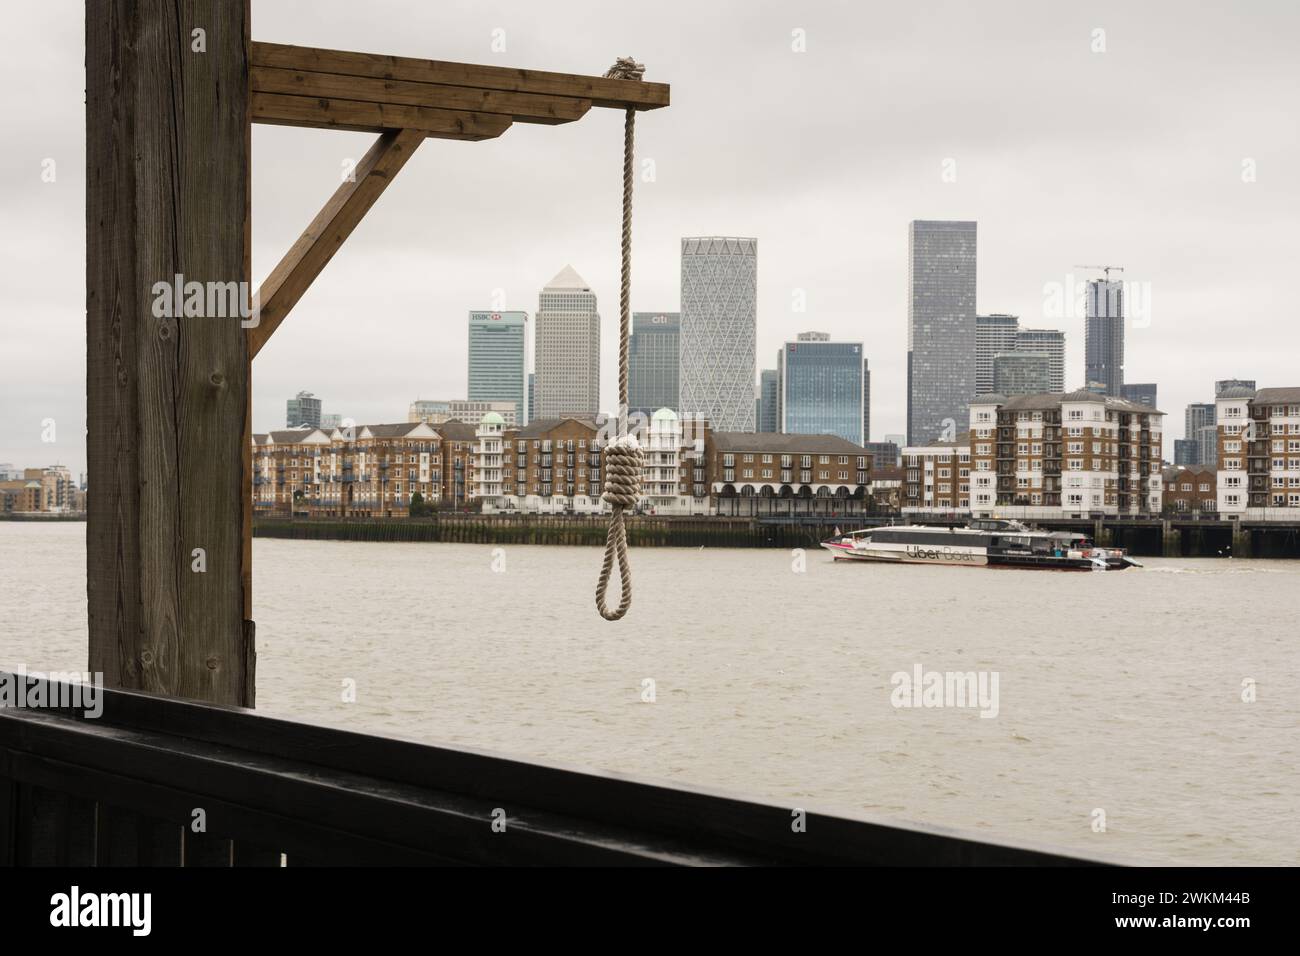 Nahaufnahme des Gibbet vor dem Prospect of Whitby Public House am Ufer der Themse in Wapping, London, E1, England, Großbritannien Stockfoto